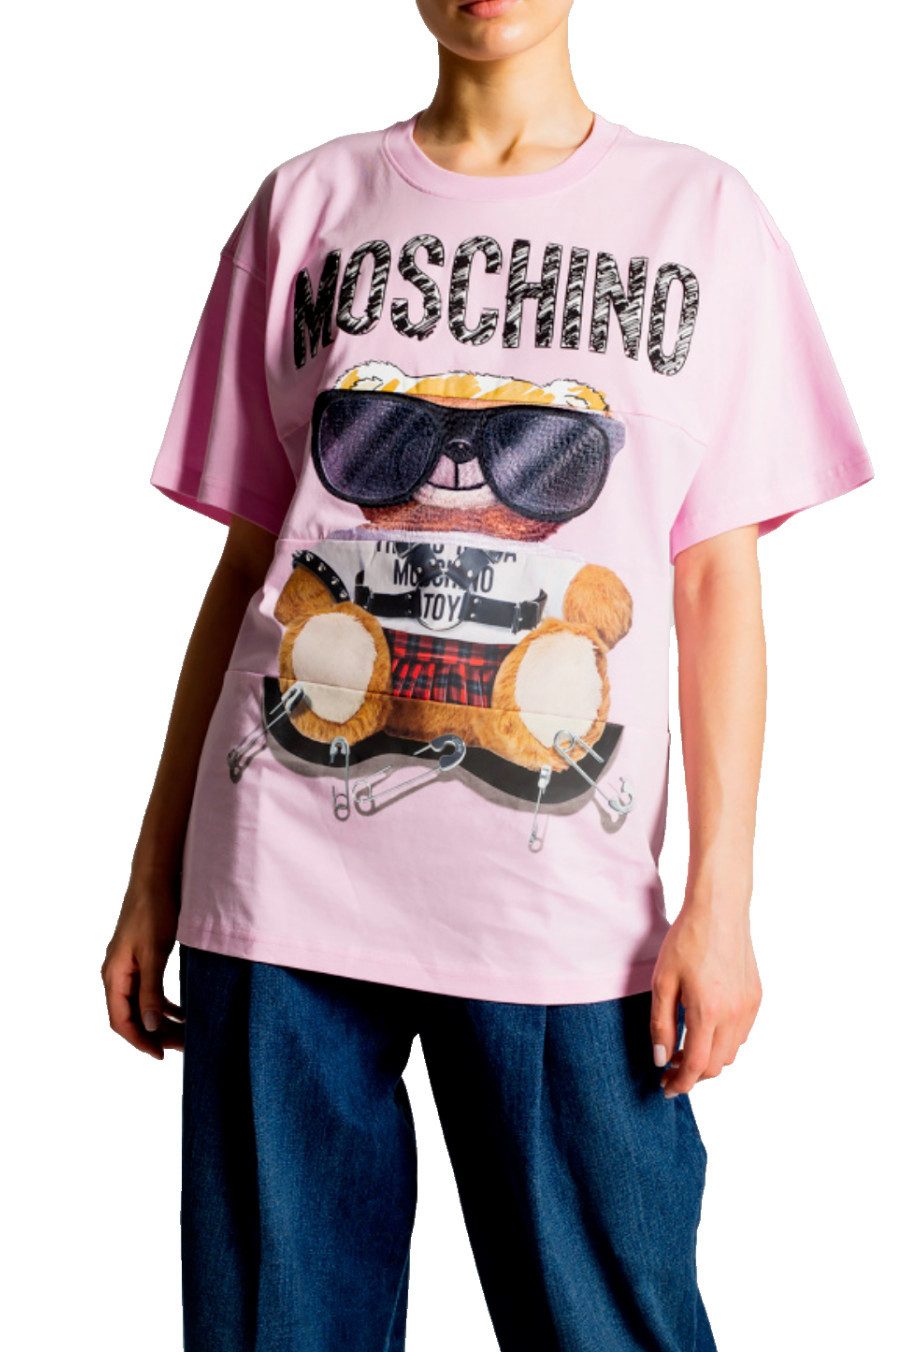 Moschino T-Shirt Teddy Bear Oversize T-shirt Loose Fit Teddybär Bär Top